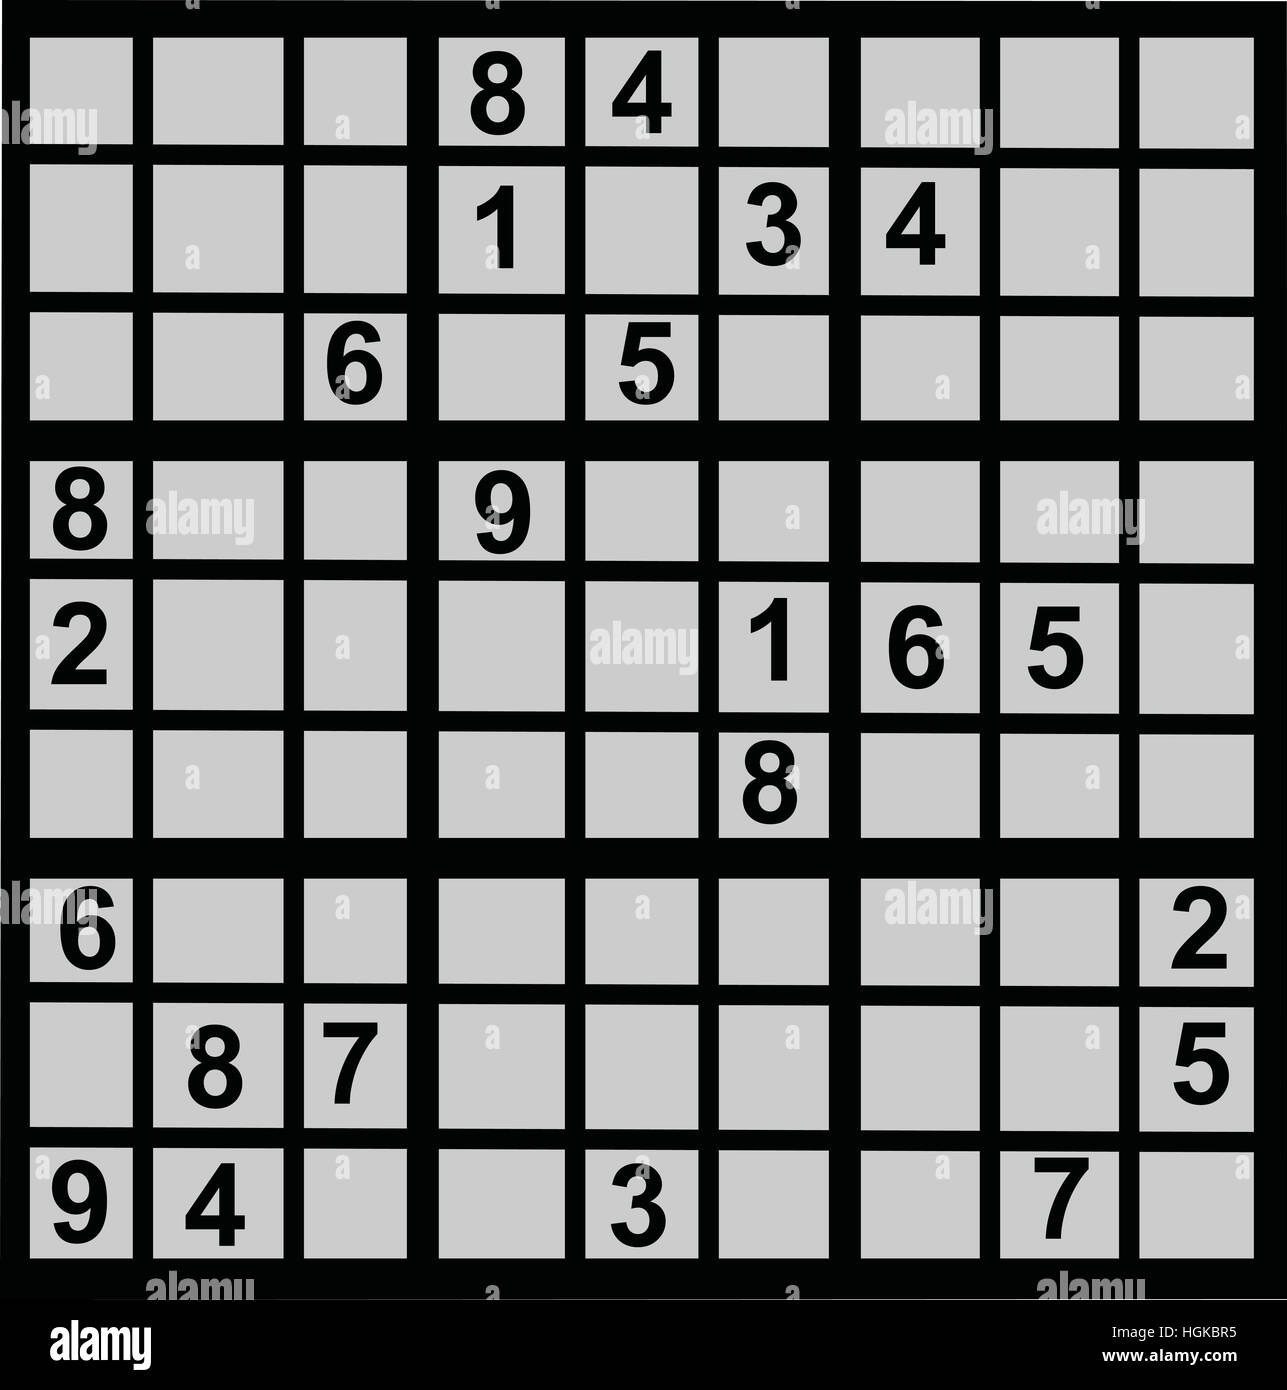 Sudoku game Stock Photo